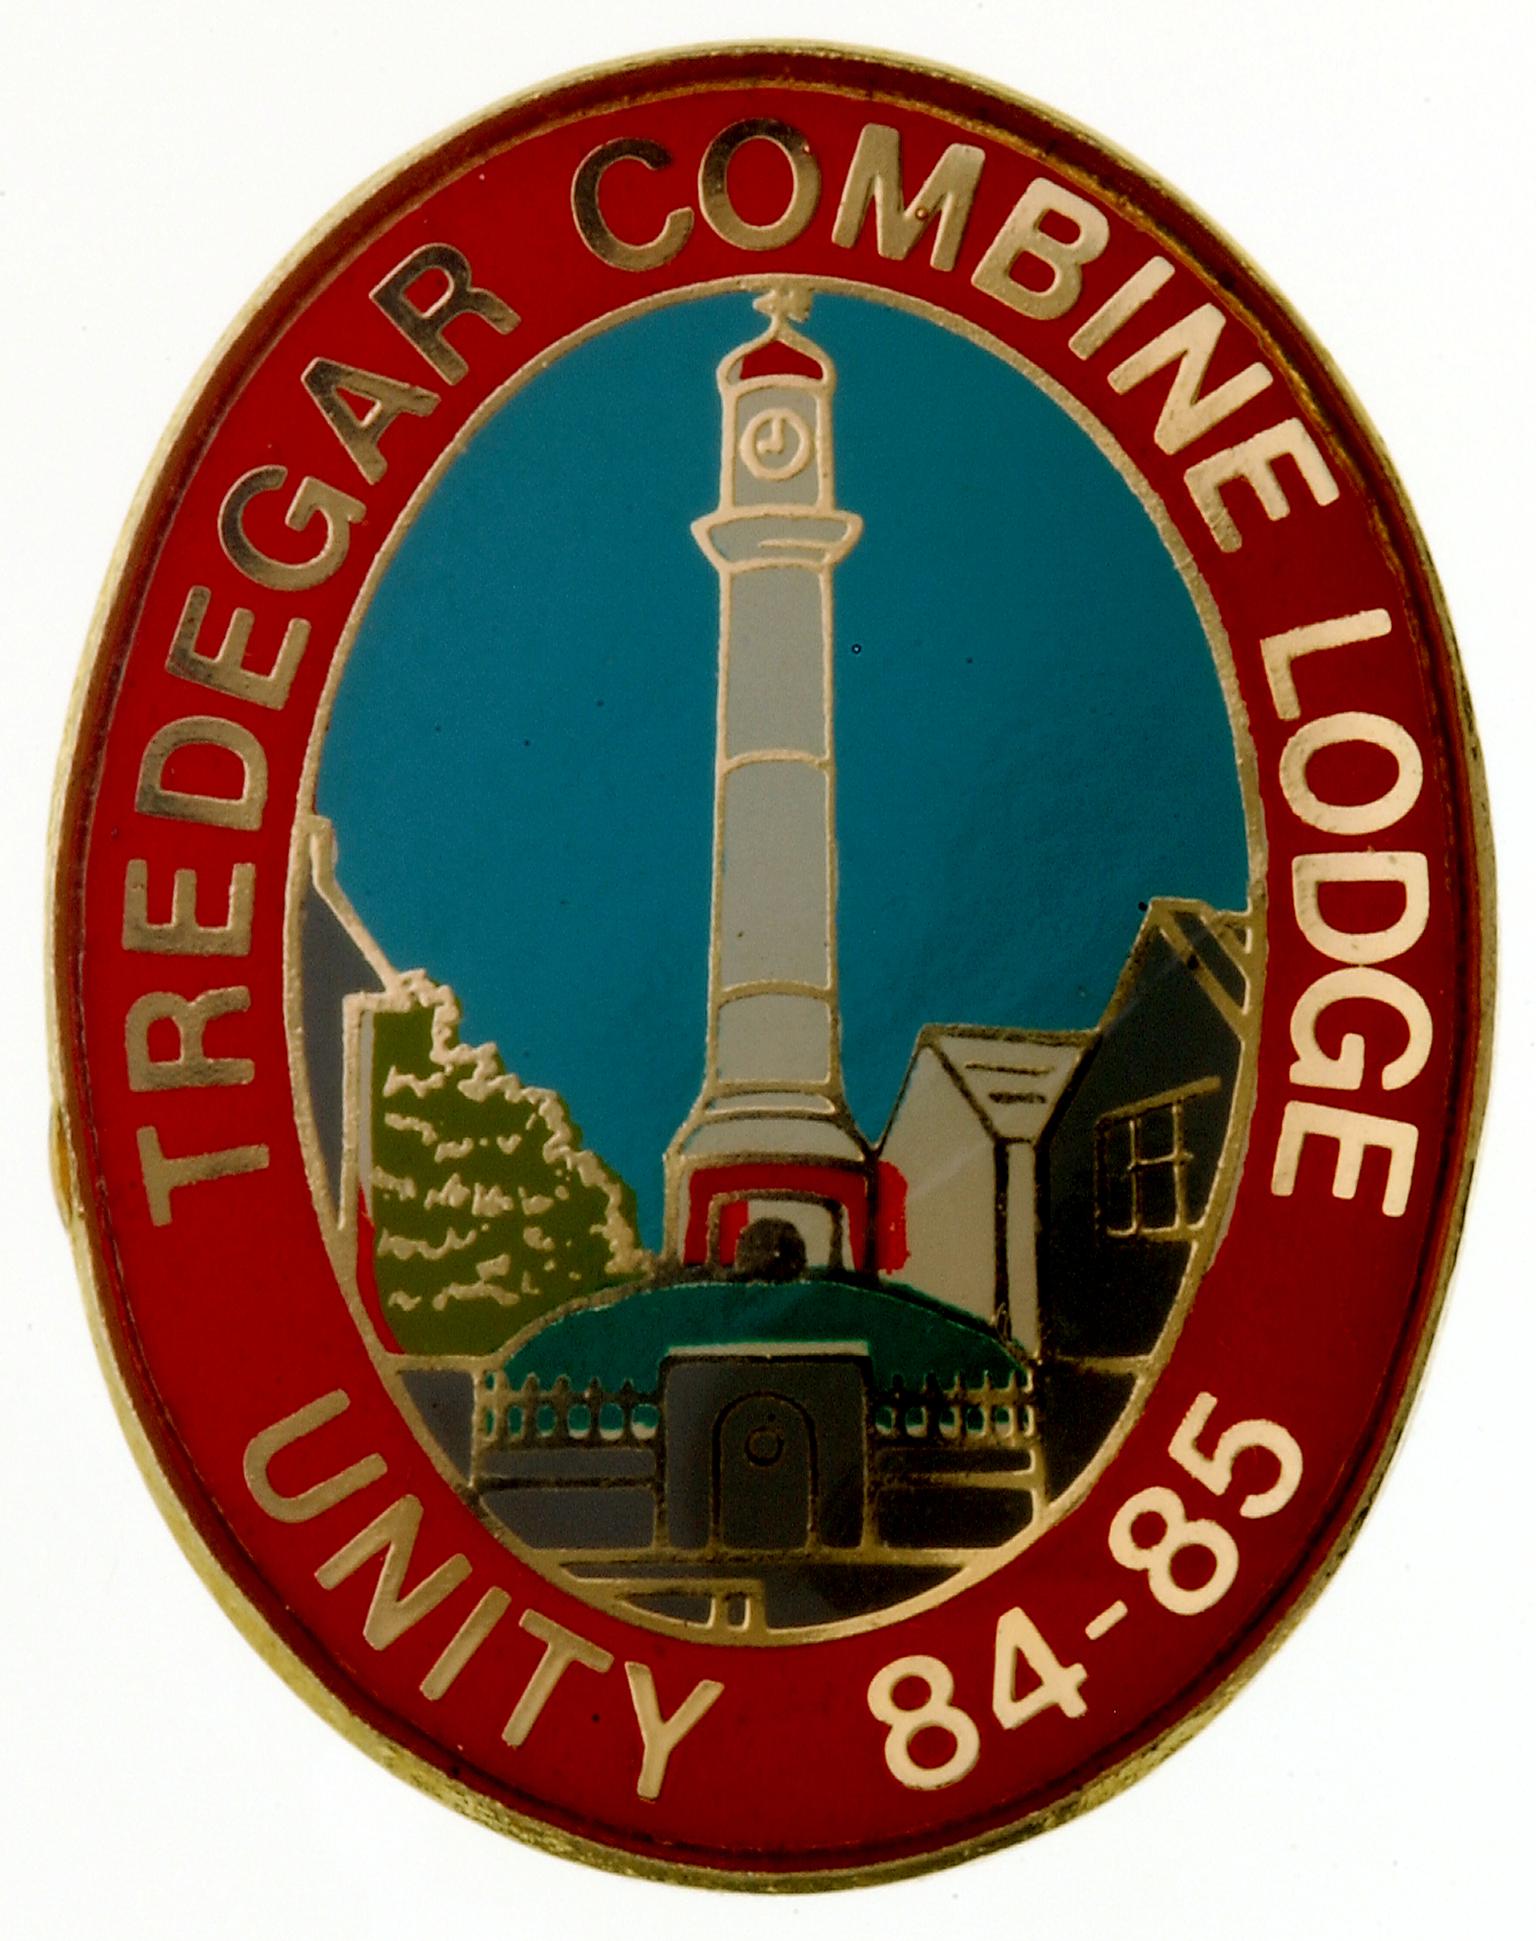 Tredegar Combine 1984 strike badge